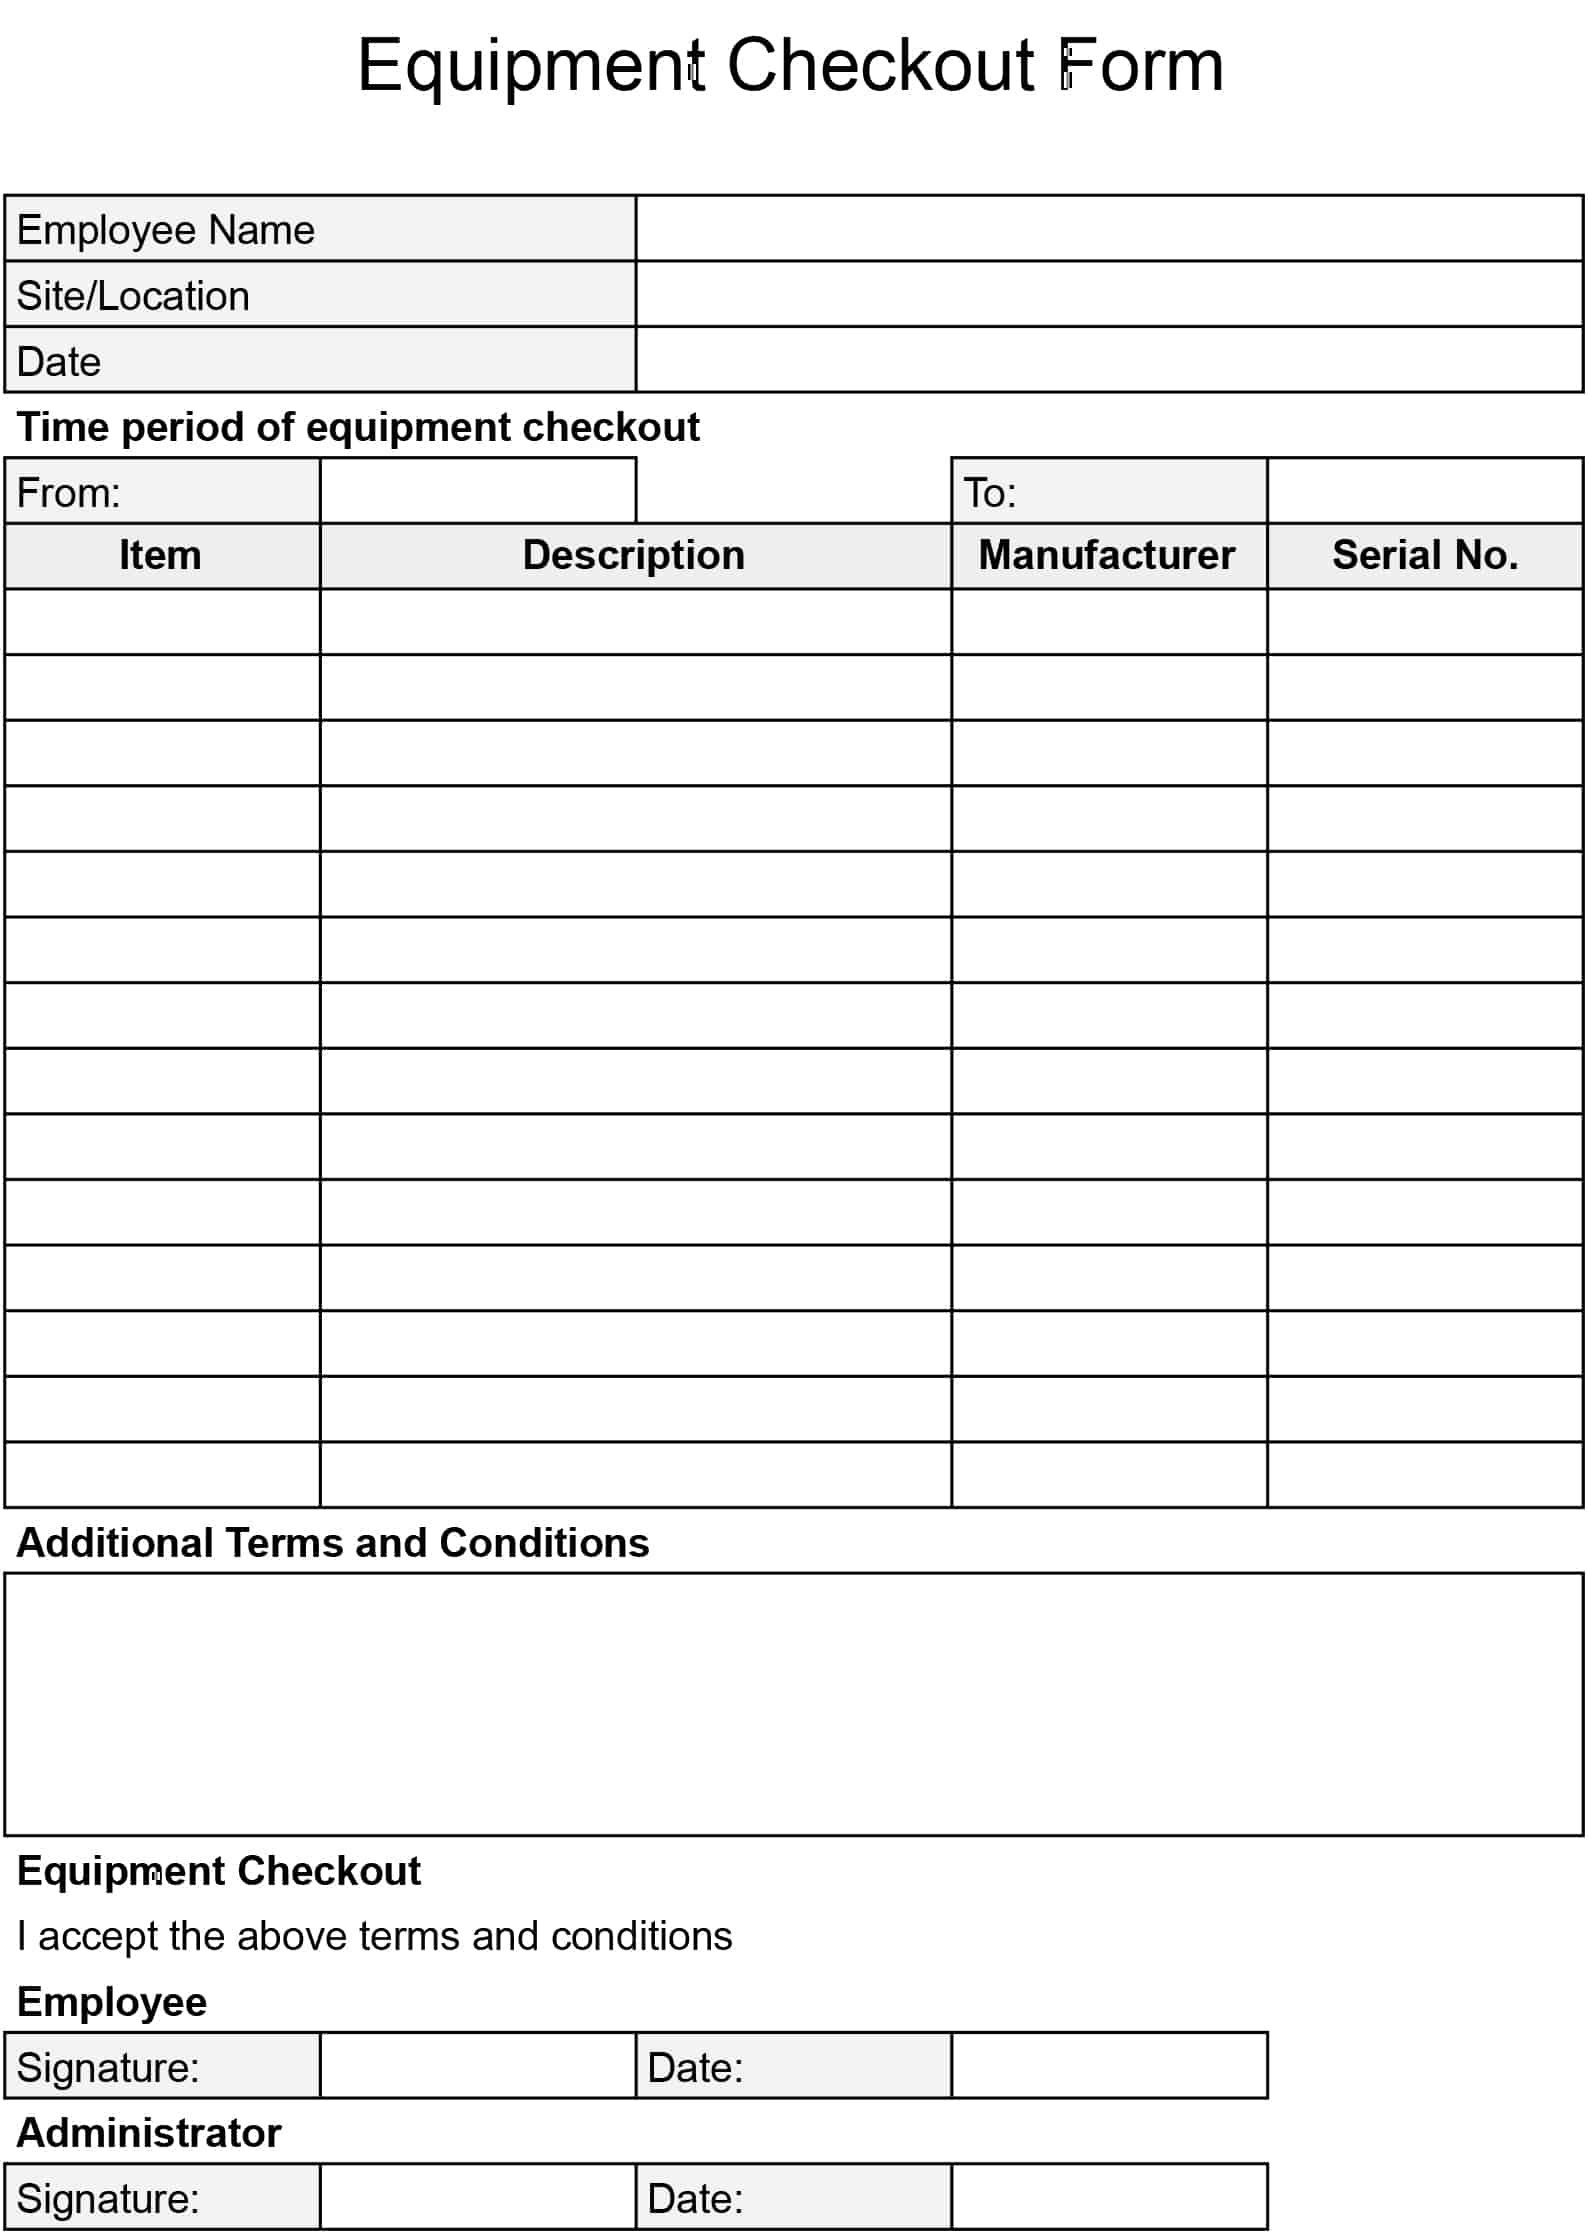 Equipment Checkout Form